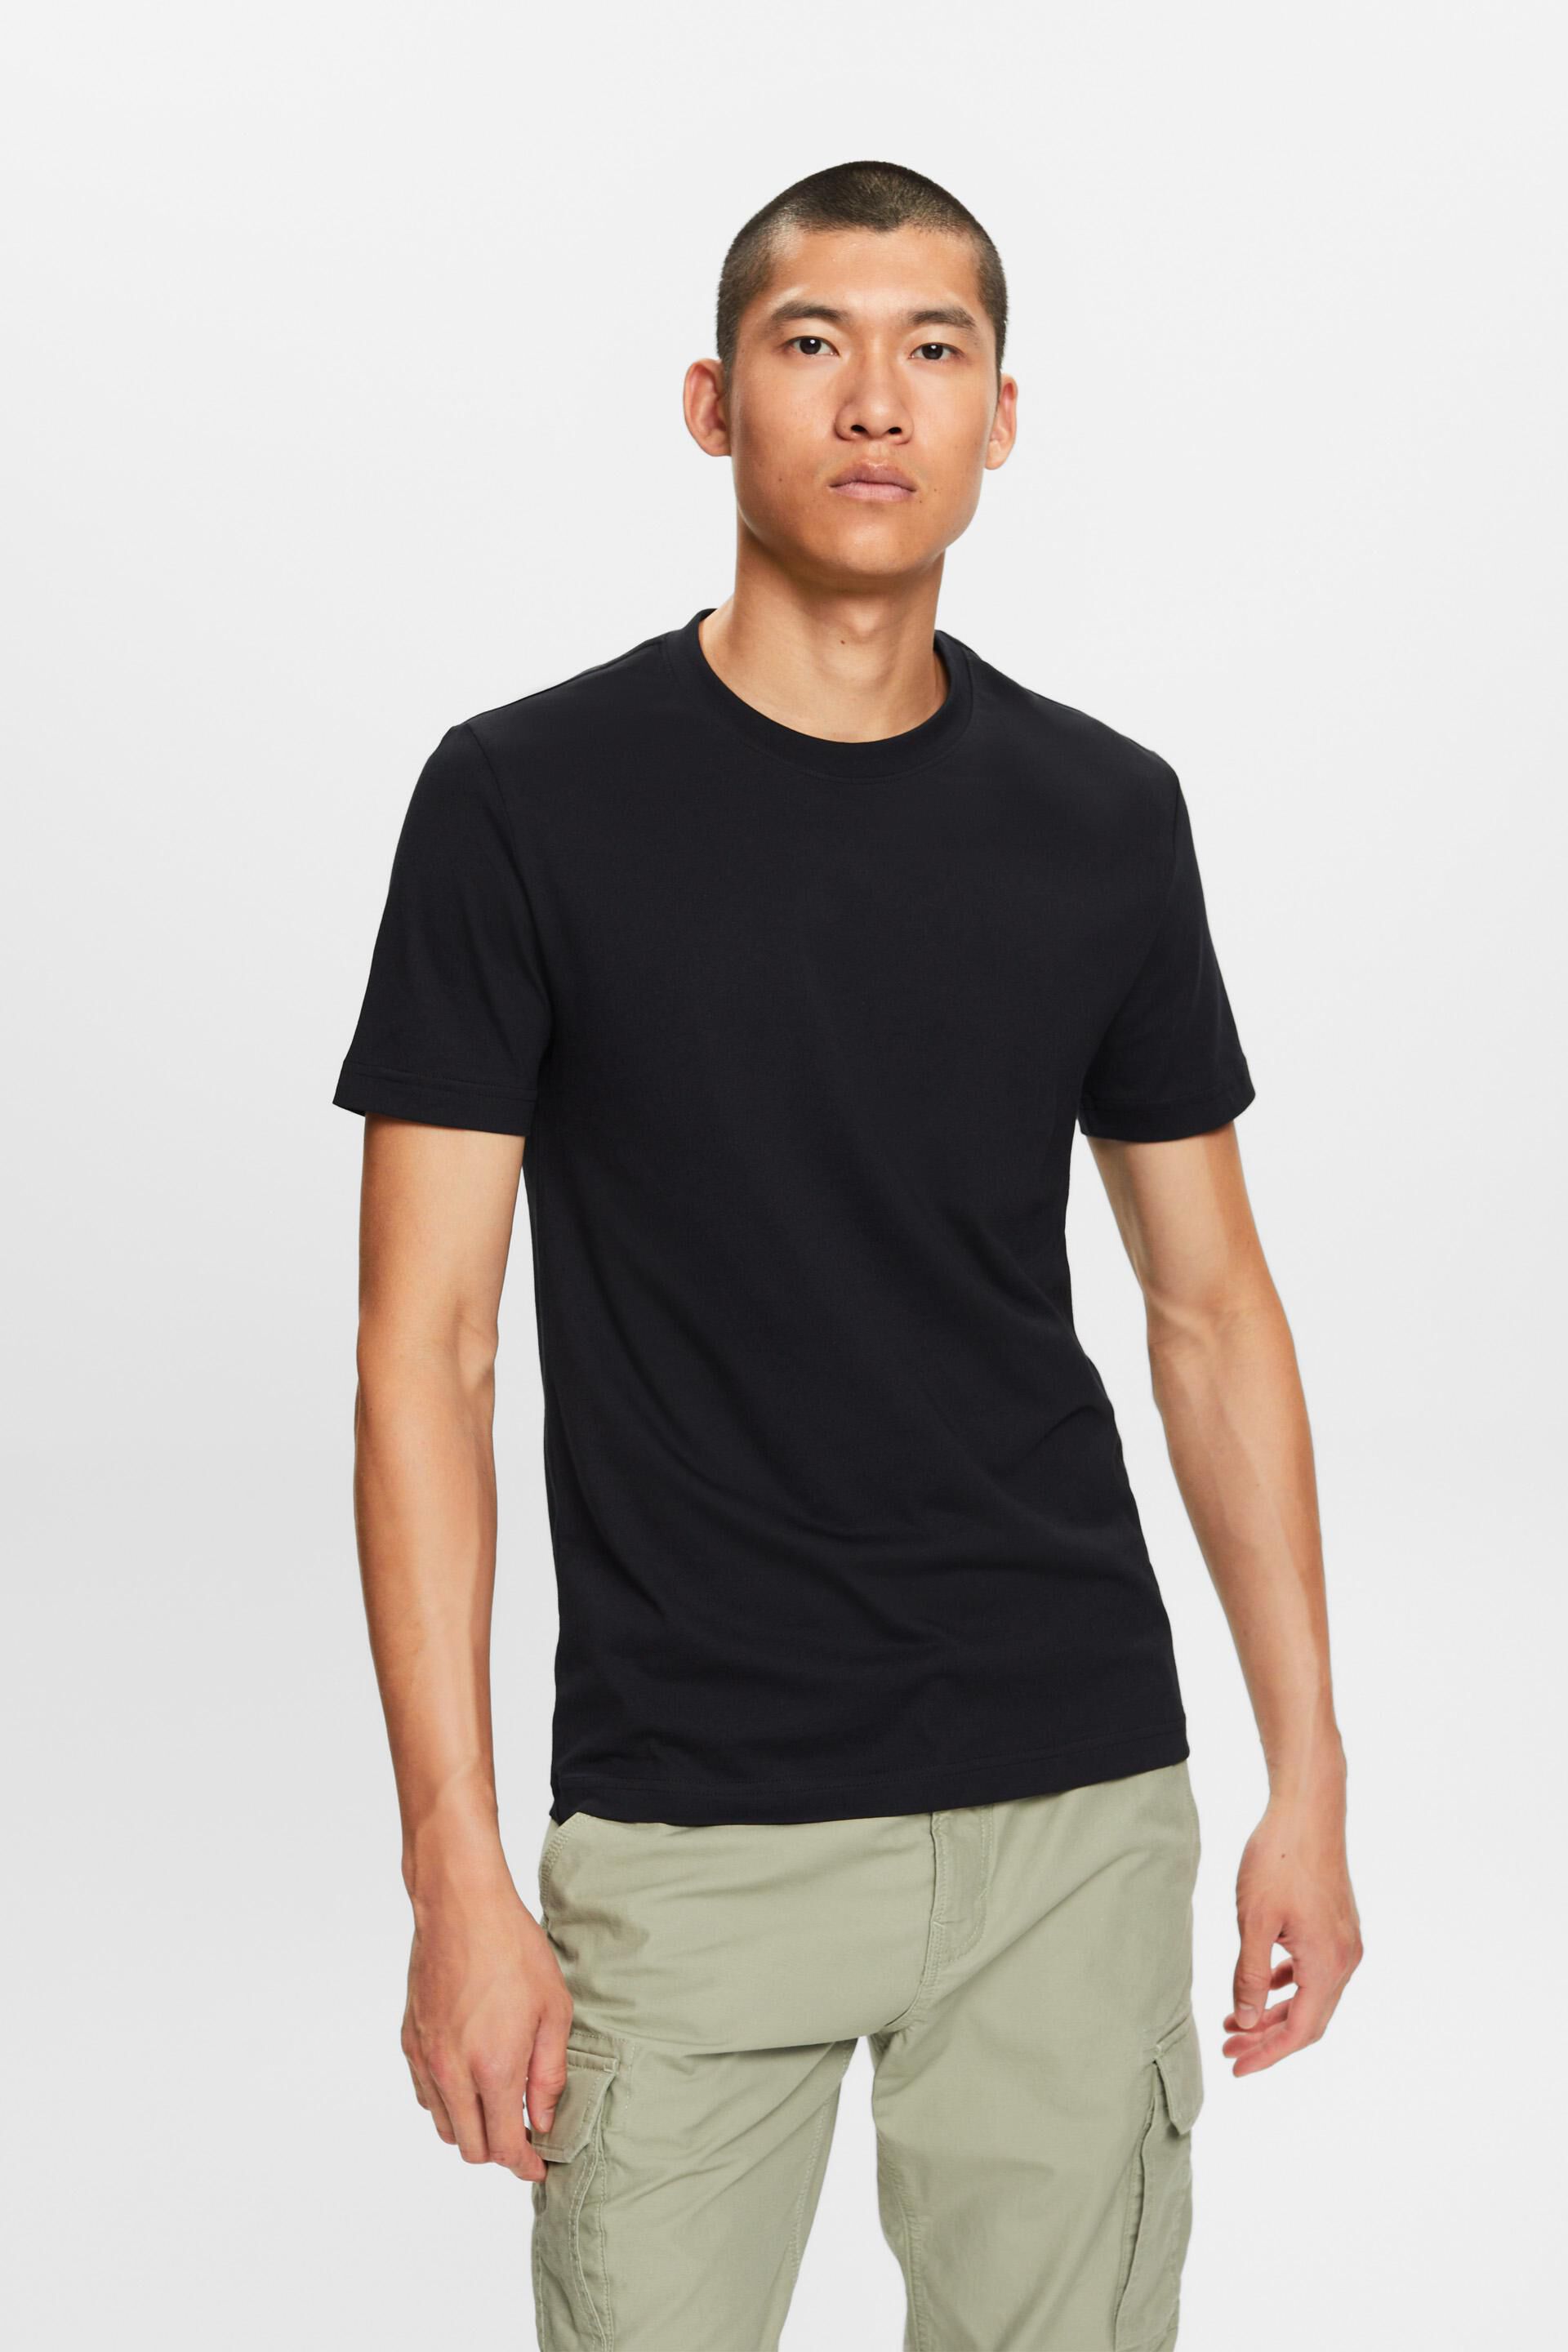 Jersey crewneck t-shirt, 100% cotton